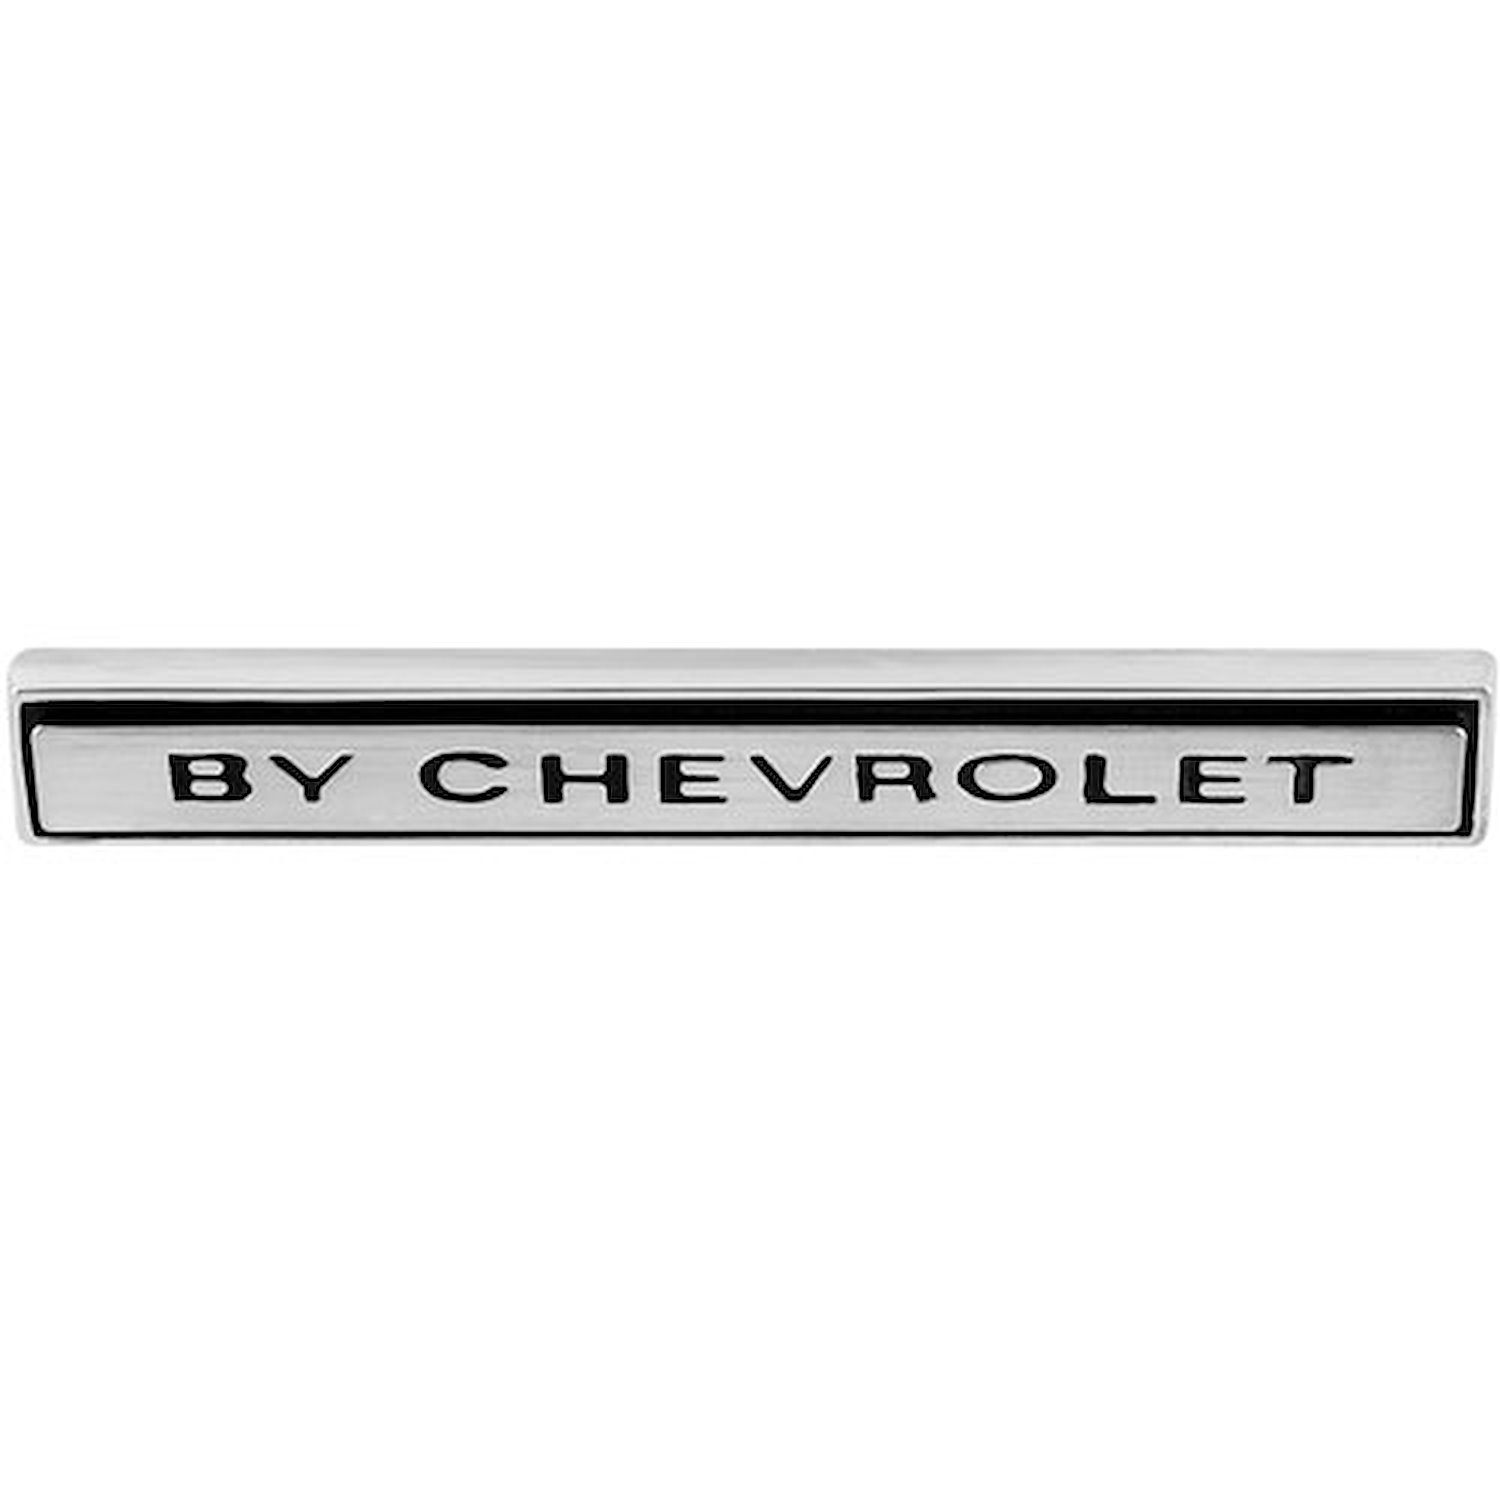 Rear Emblem 1971 Chevy Monte Carlo